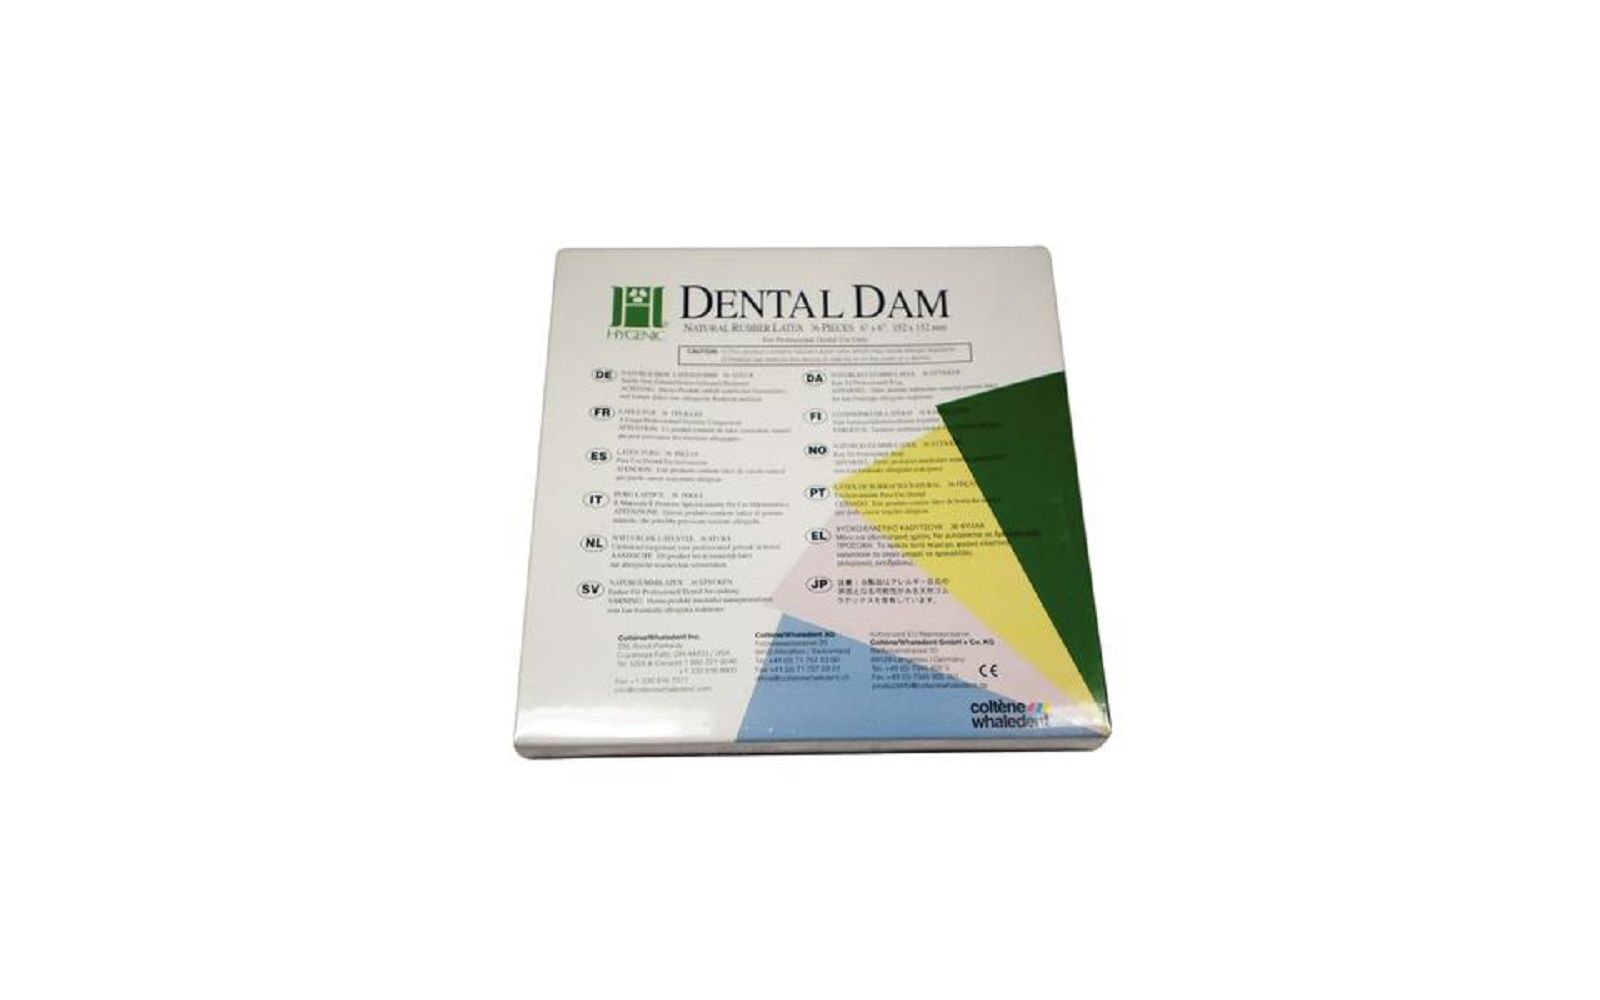 Hygenic® latex dental dam – adults, ready cut, 6" x 6", 36/pkg - coltene